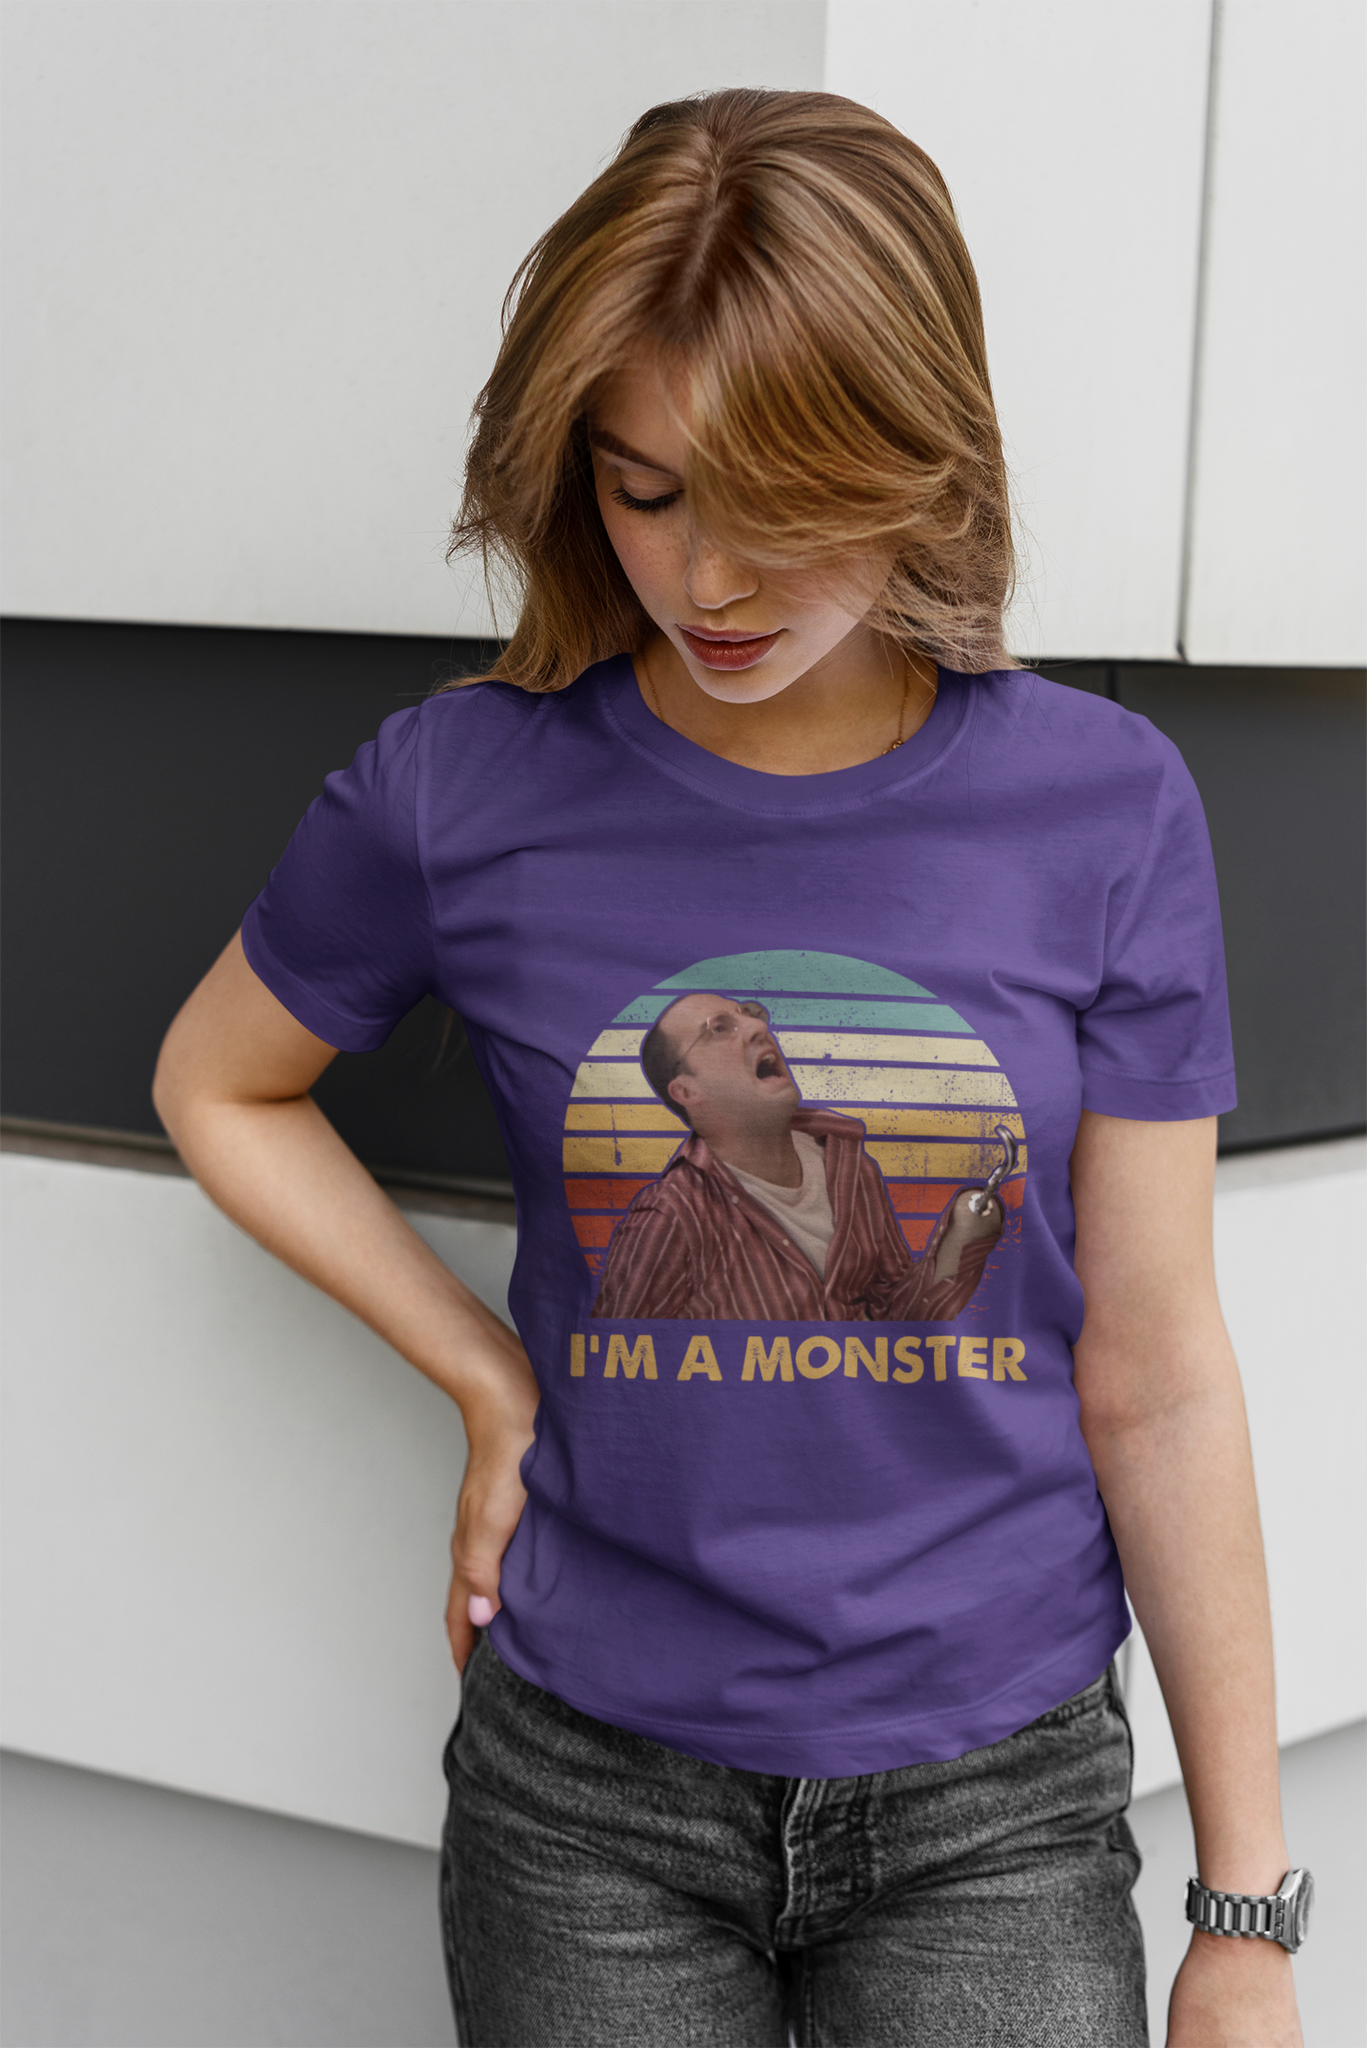 Arrested Development Vintage T Shirt, Im A Monster Tshirt, Buster Bluth T Shirt